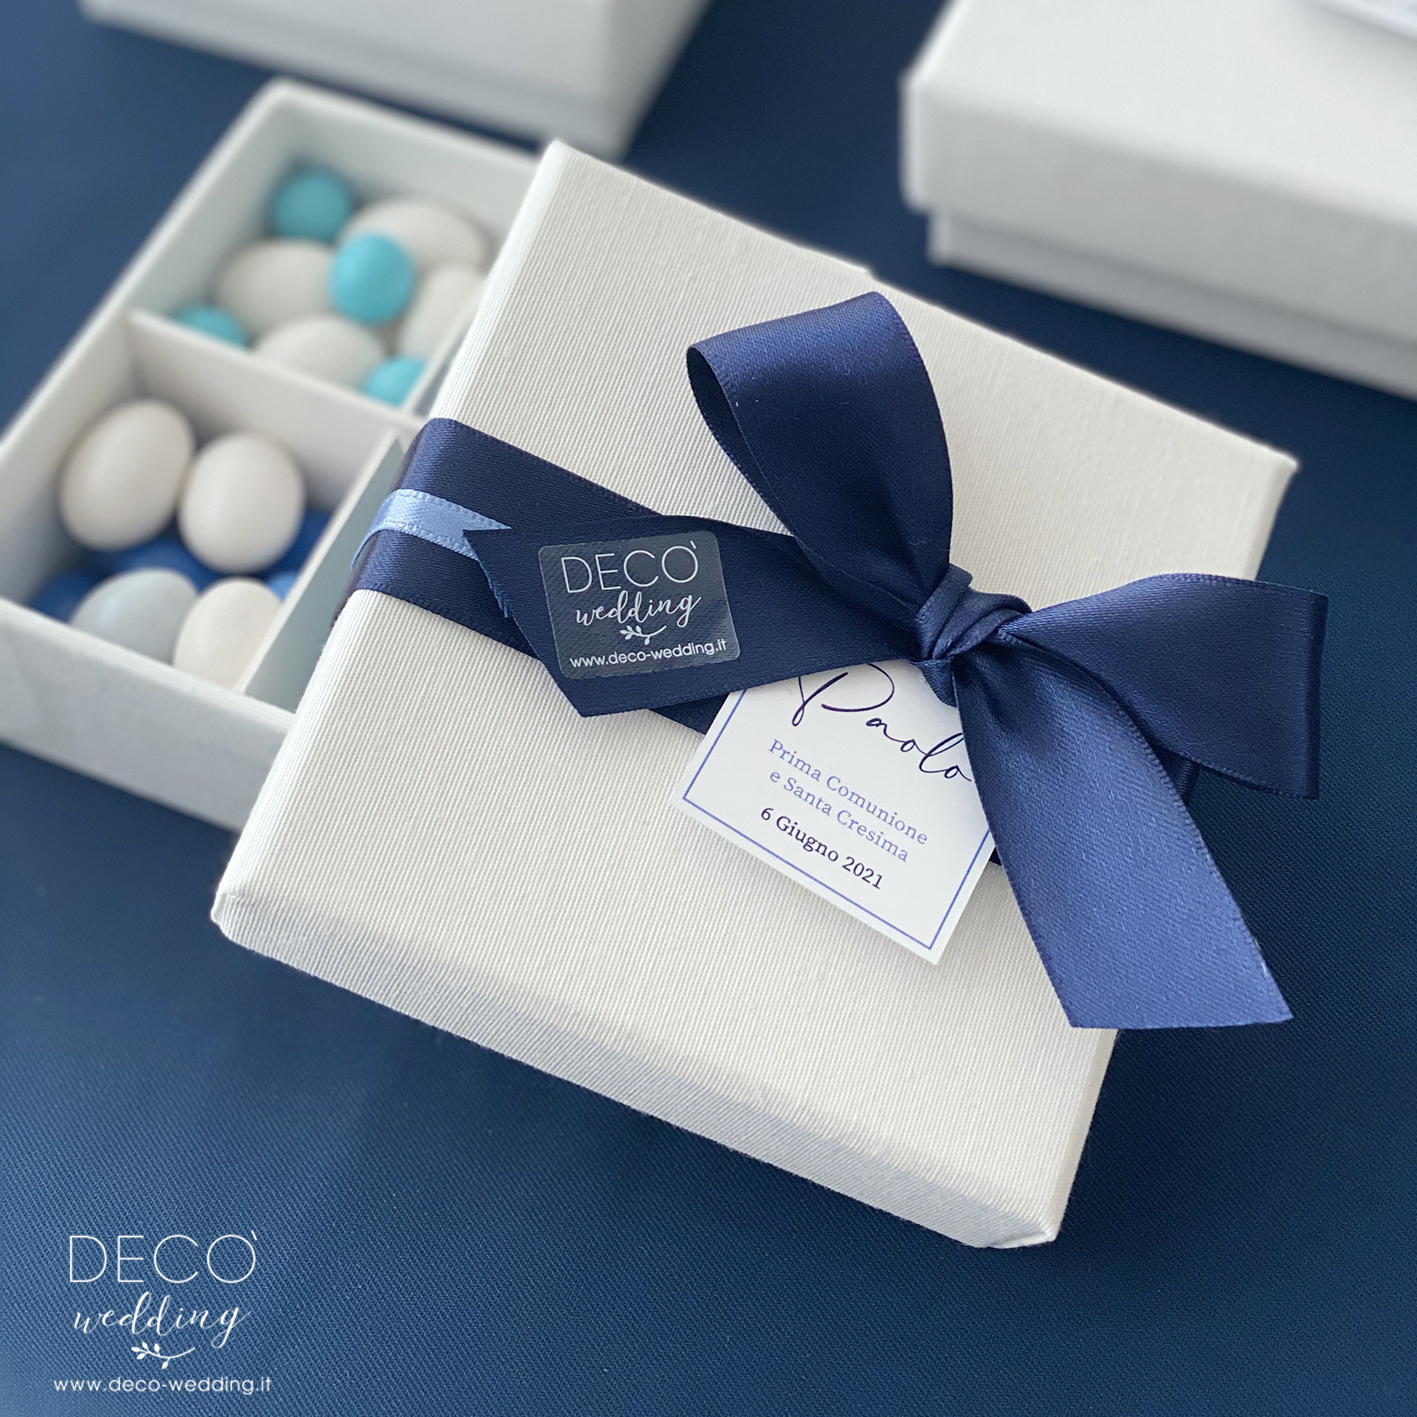 https://www.deco-wedding.it/wp-content/uploads/2021/10/scatola-degustazione-4-scomparti.jpg